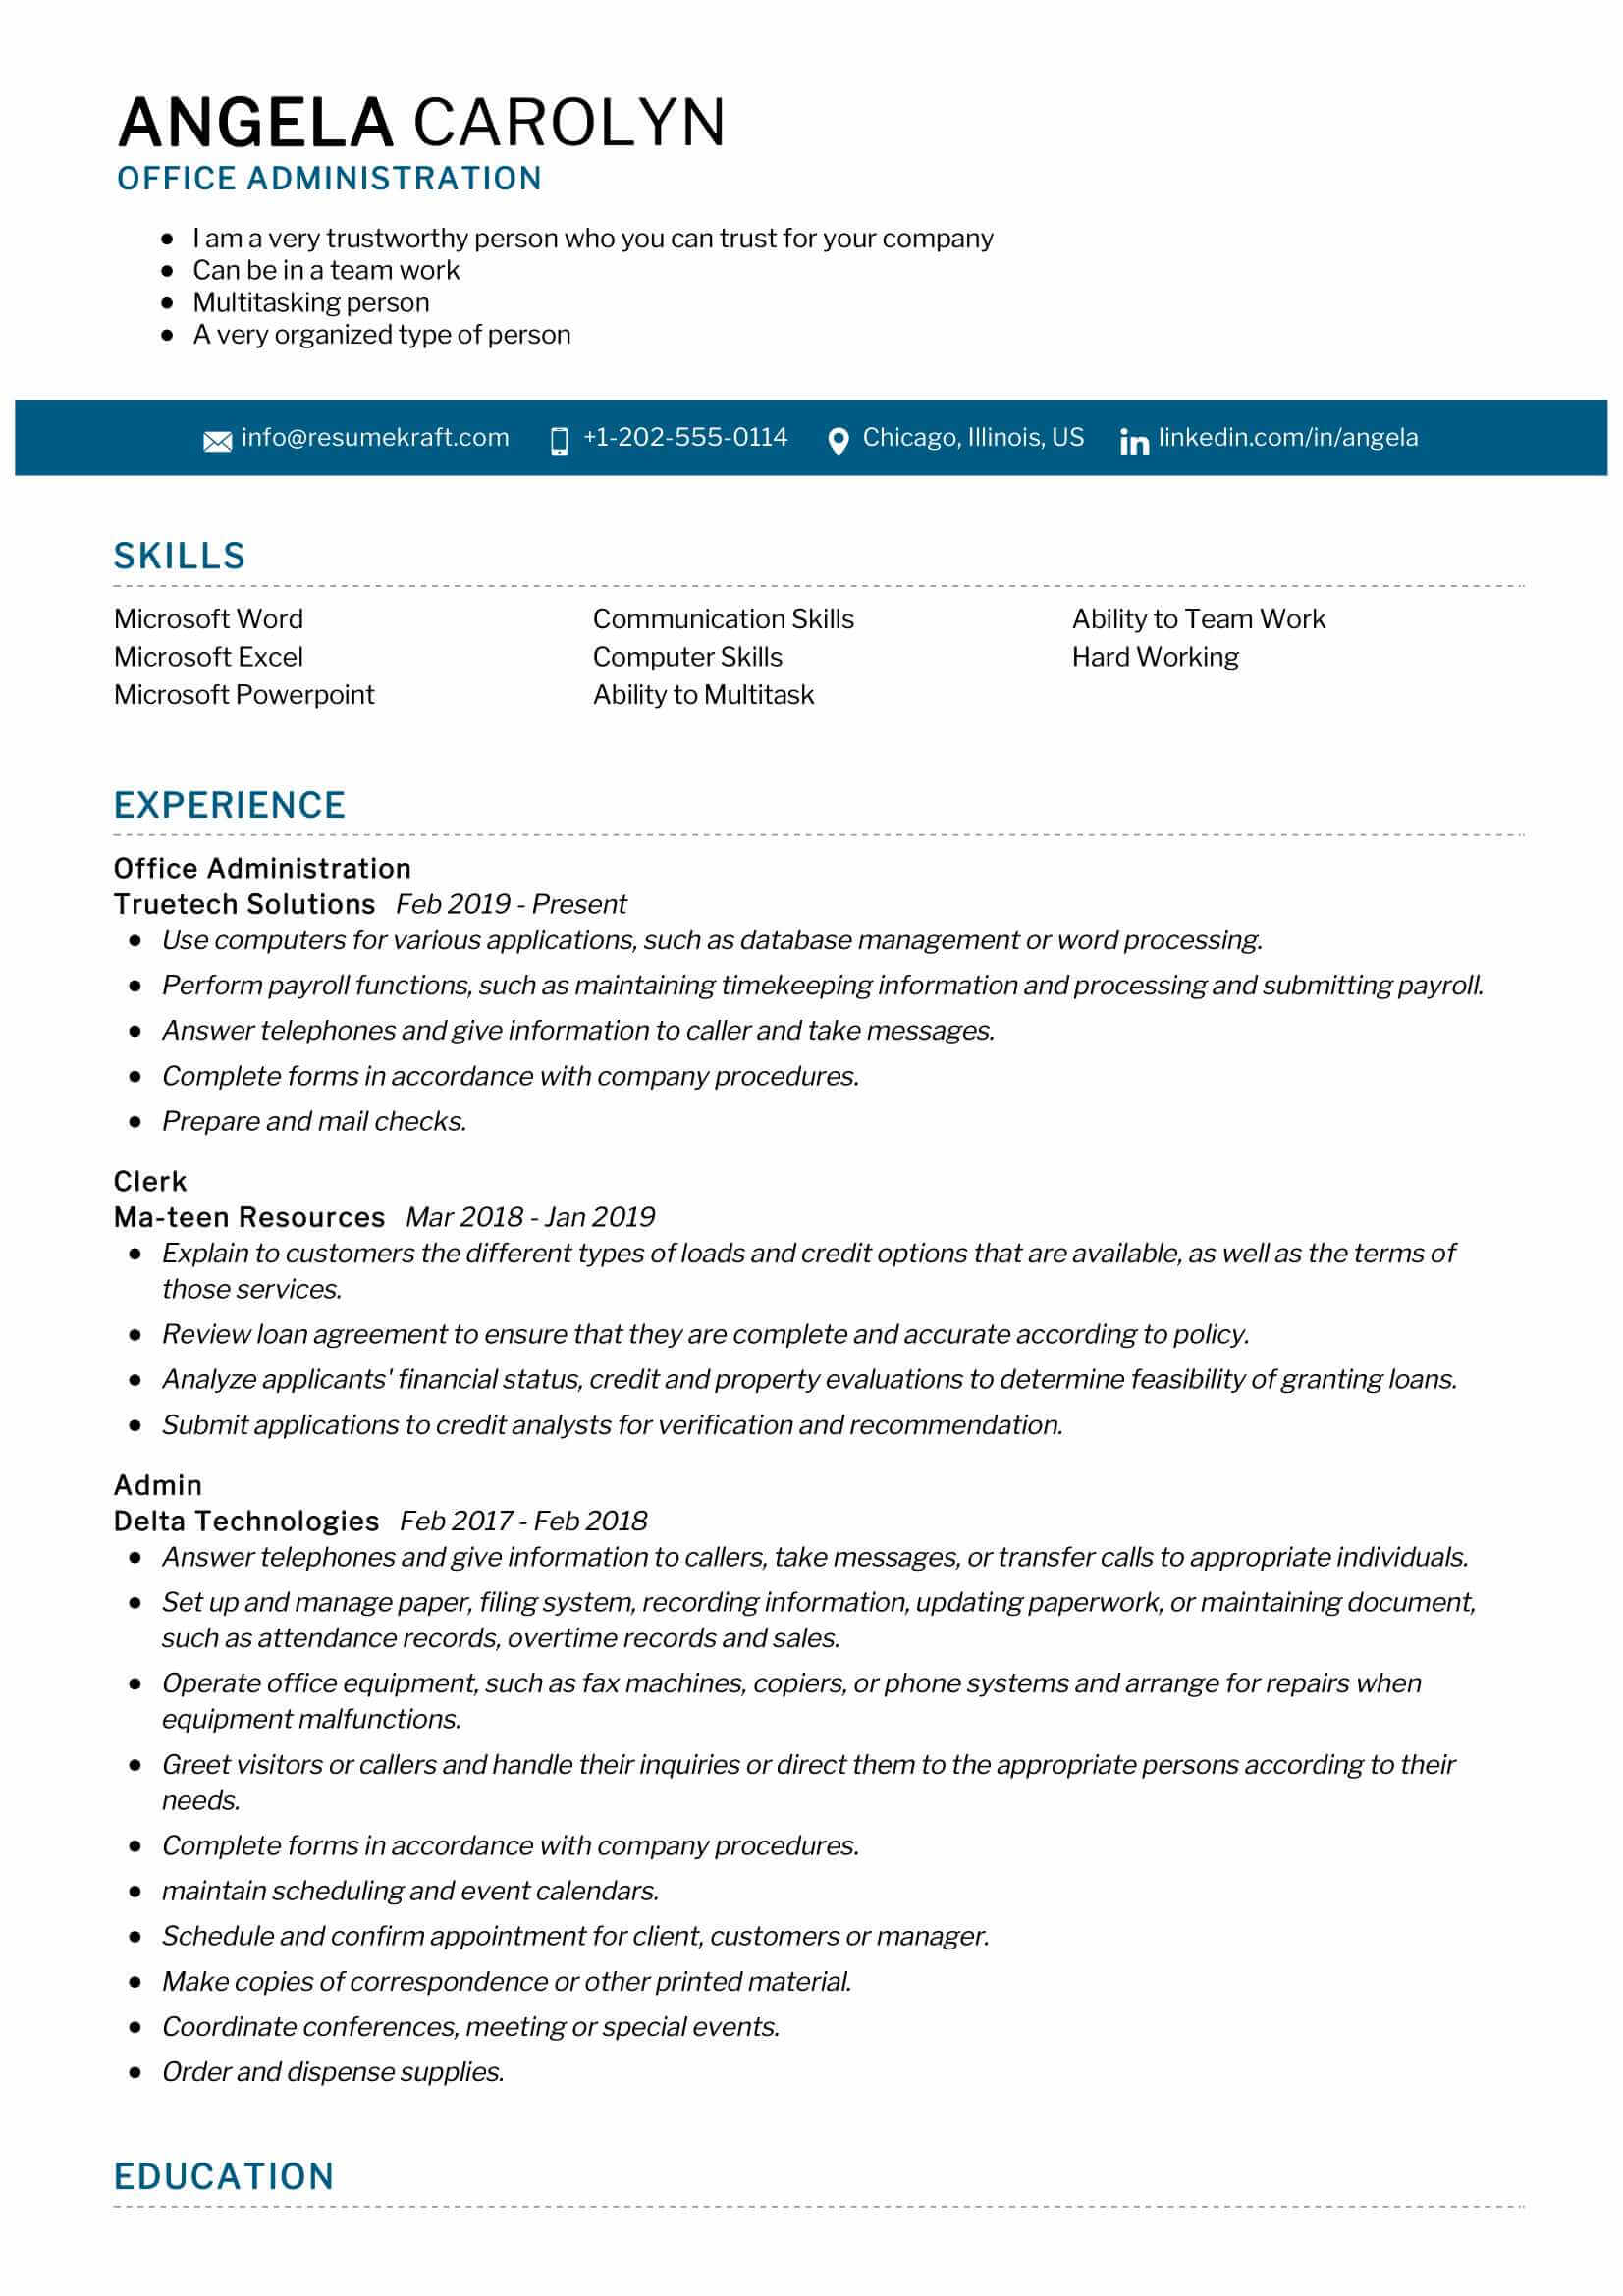 Office Administration Resume Sample 2023 | Writing Tips - ResumeKraft